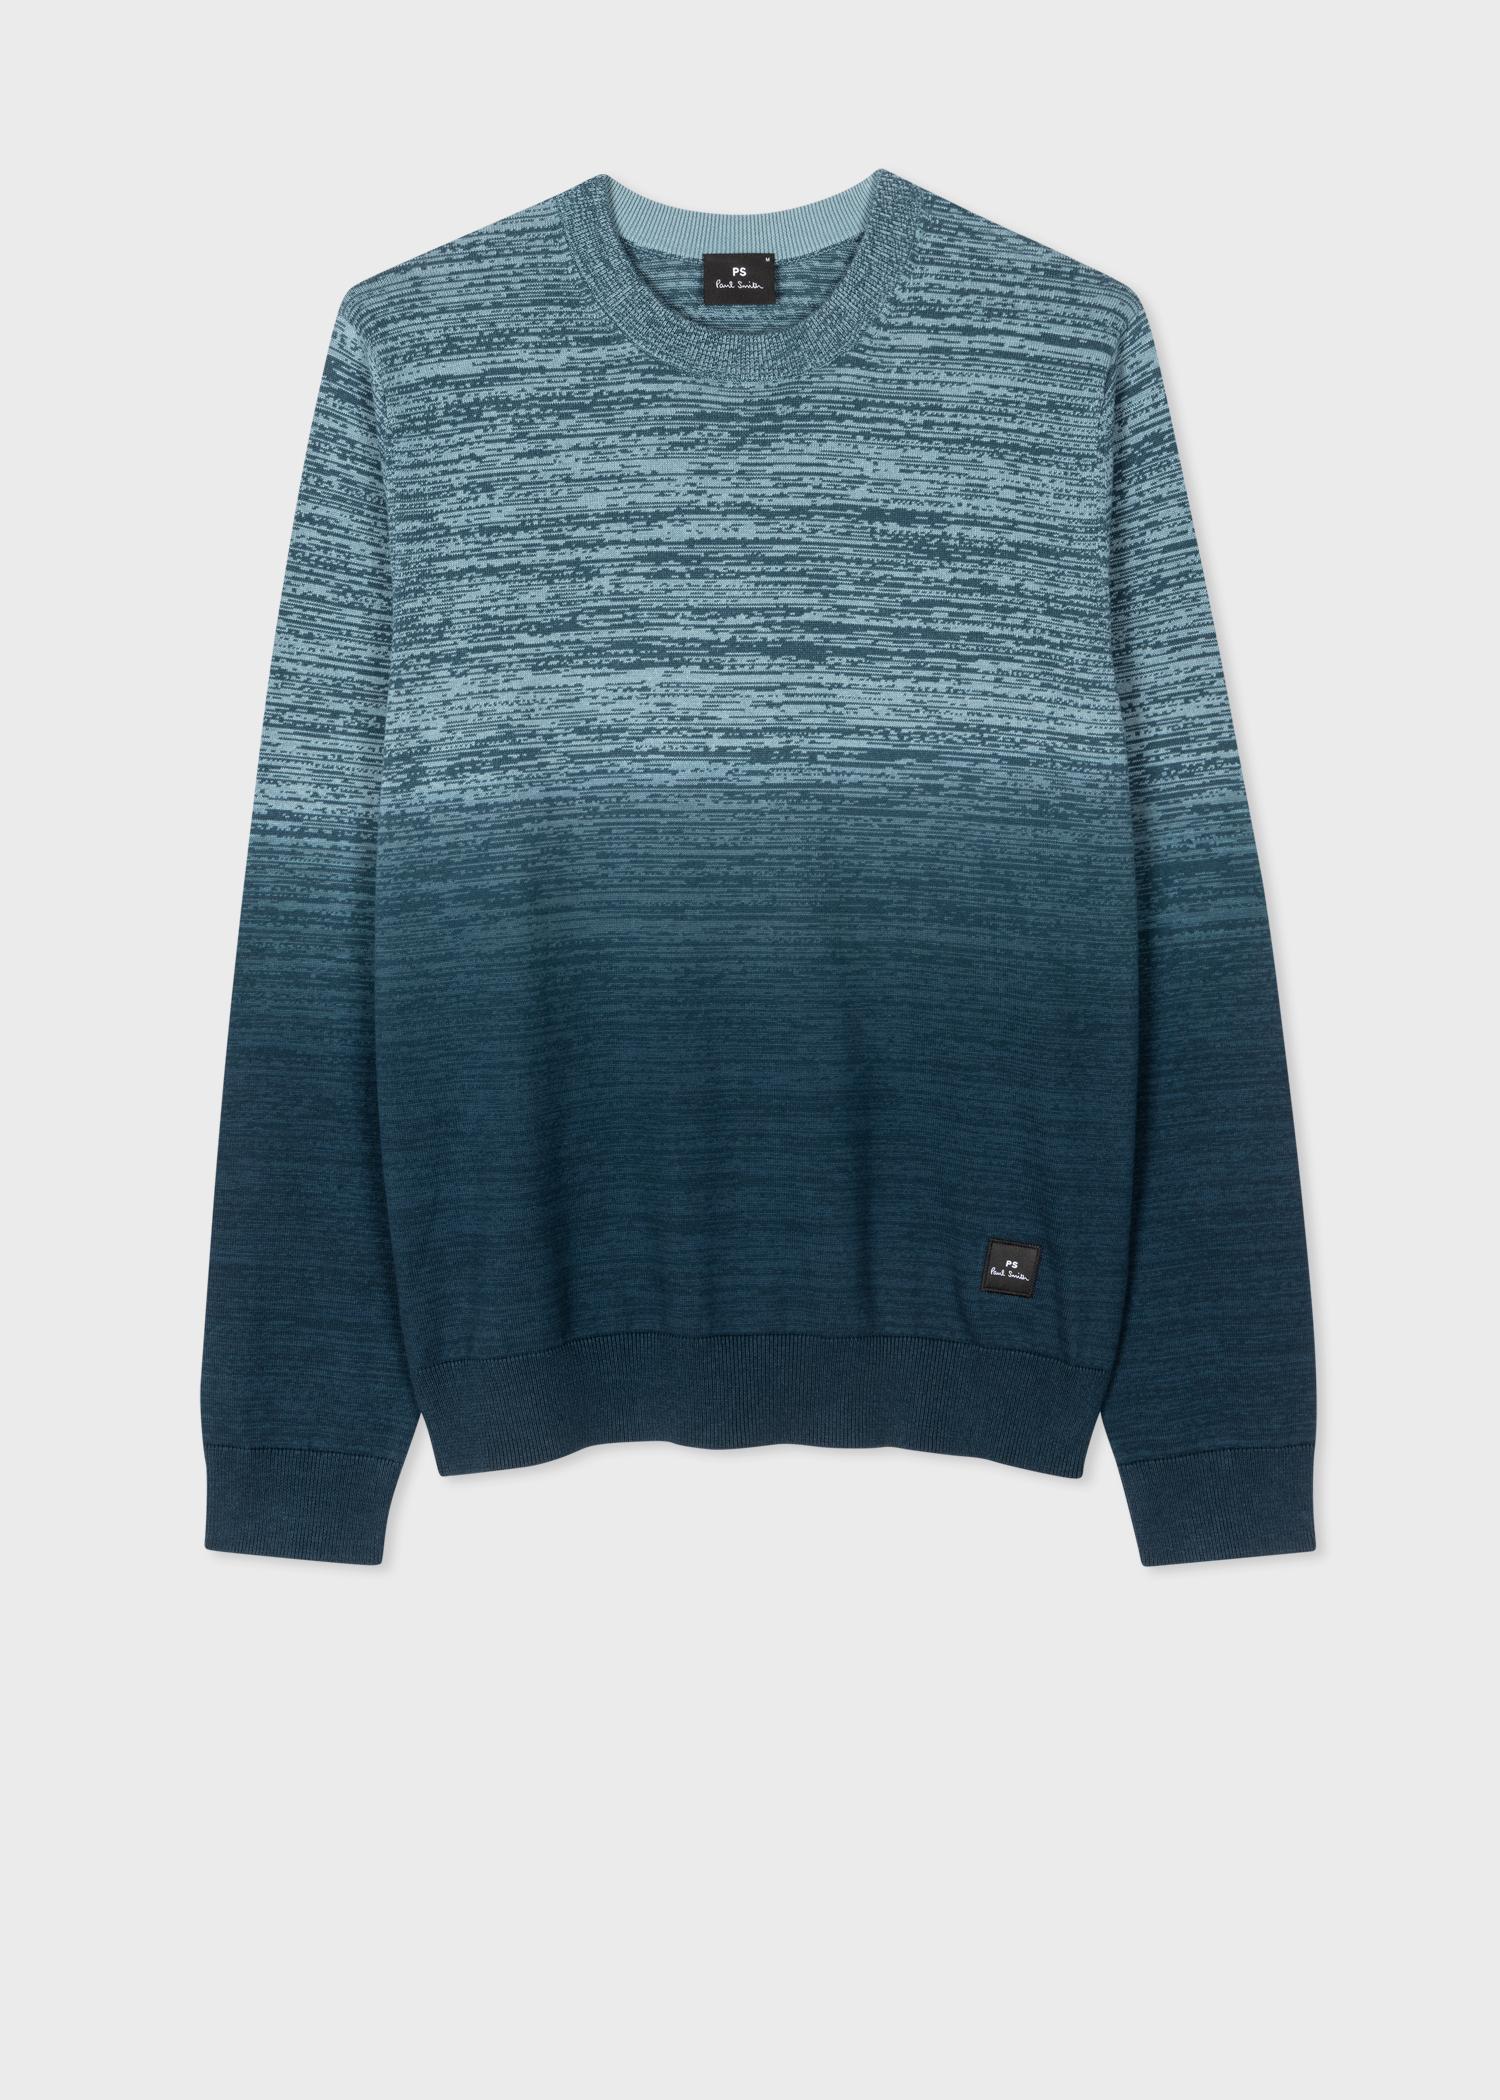 Men's Blue Dip-Dye Melange Cotton Sweater